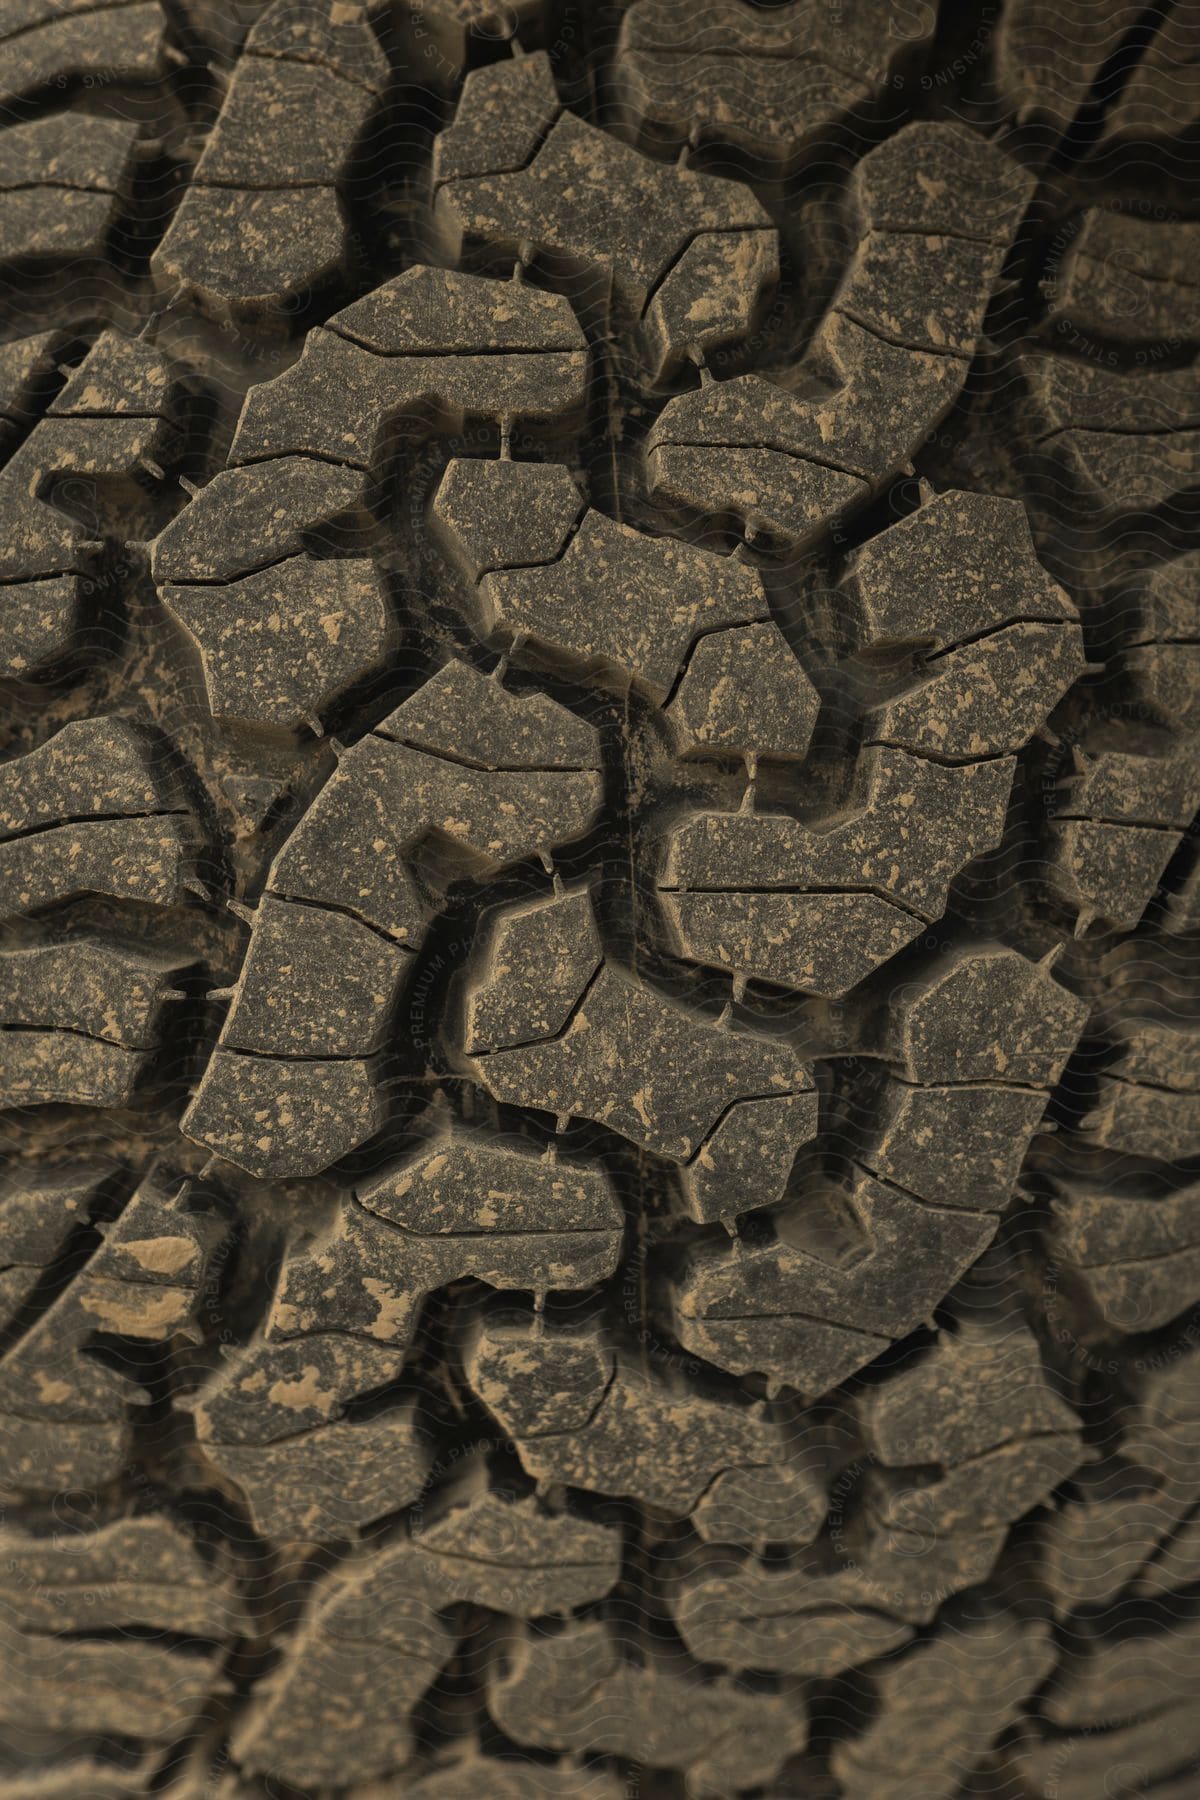 Extreme closeup of a tire tread